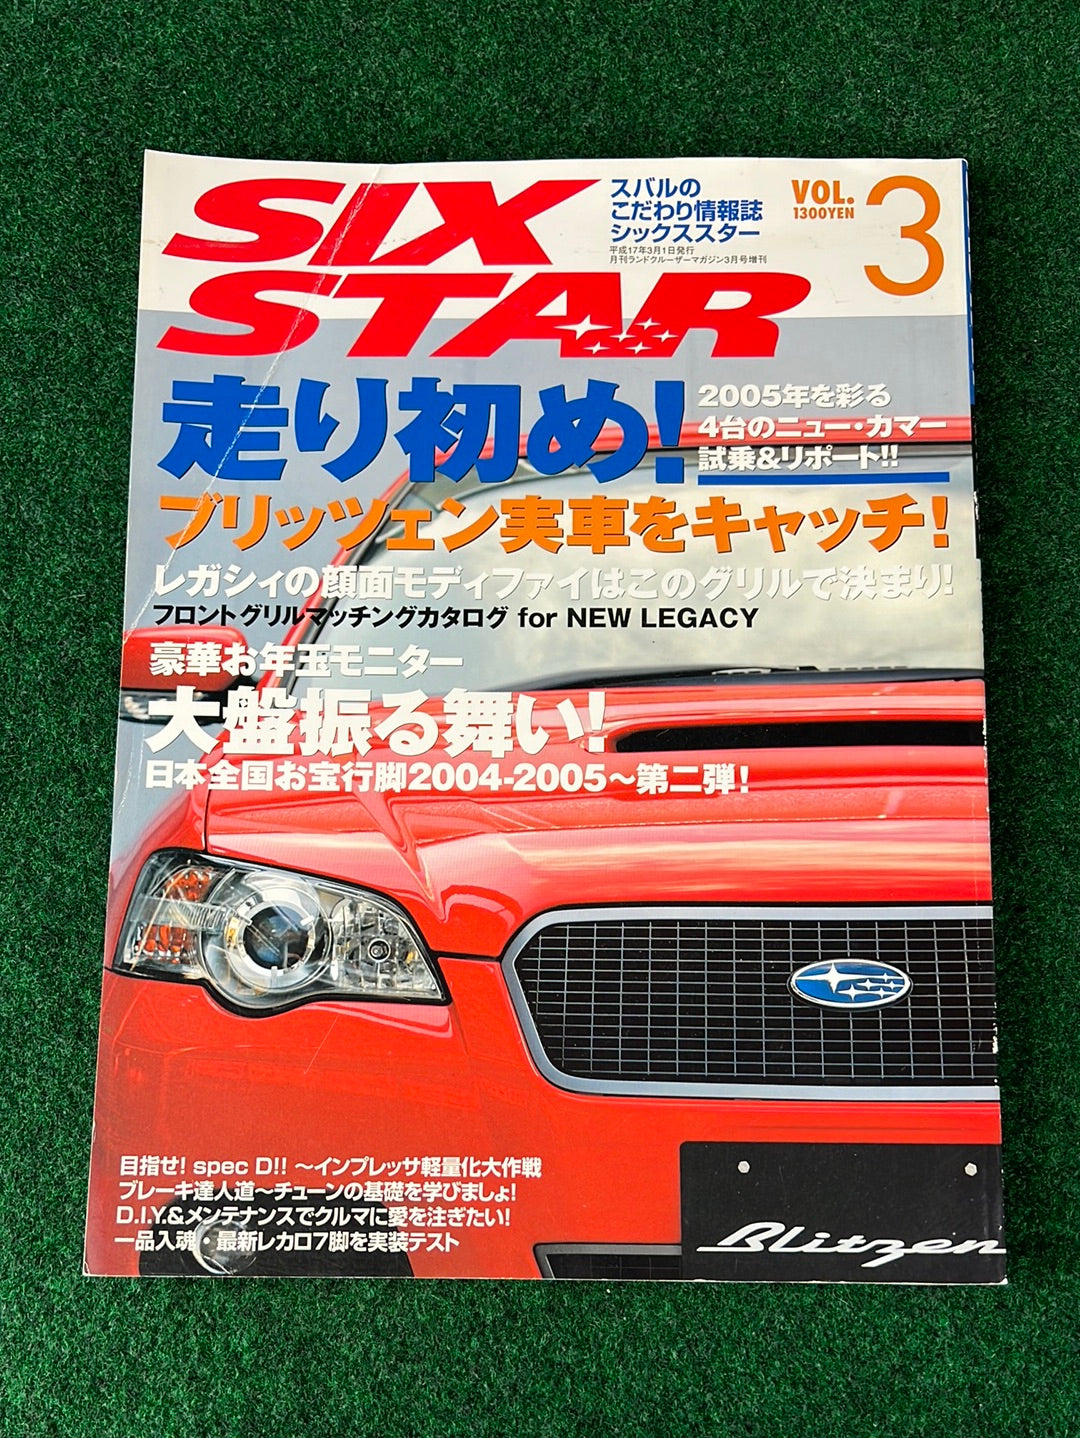 Six Star Subaru Magazine Set - 2005 Vol. 3, 4, 5